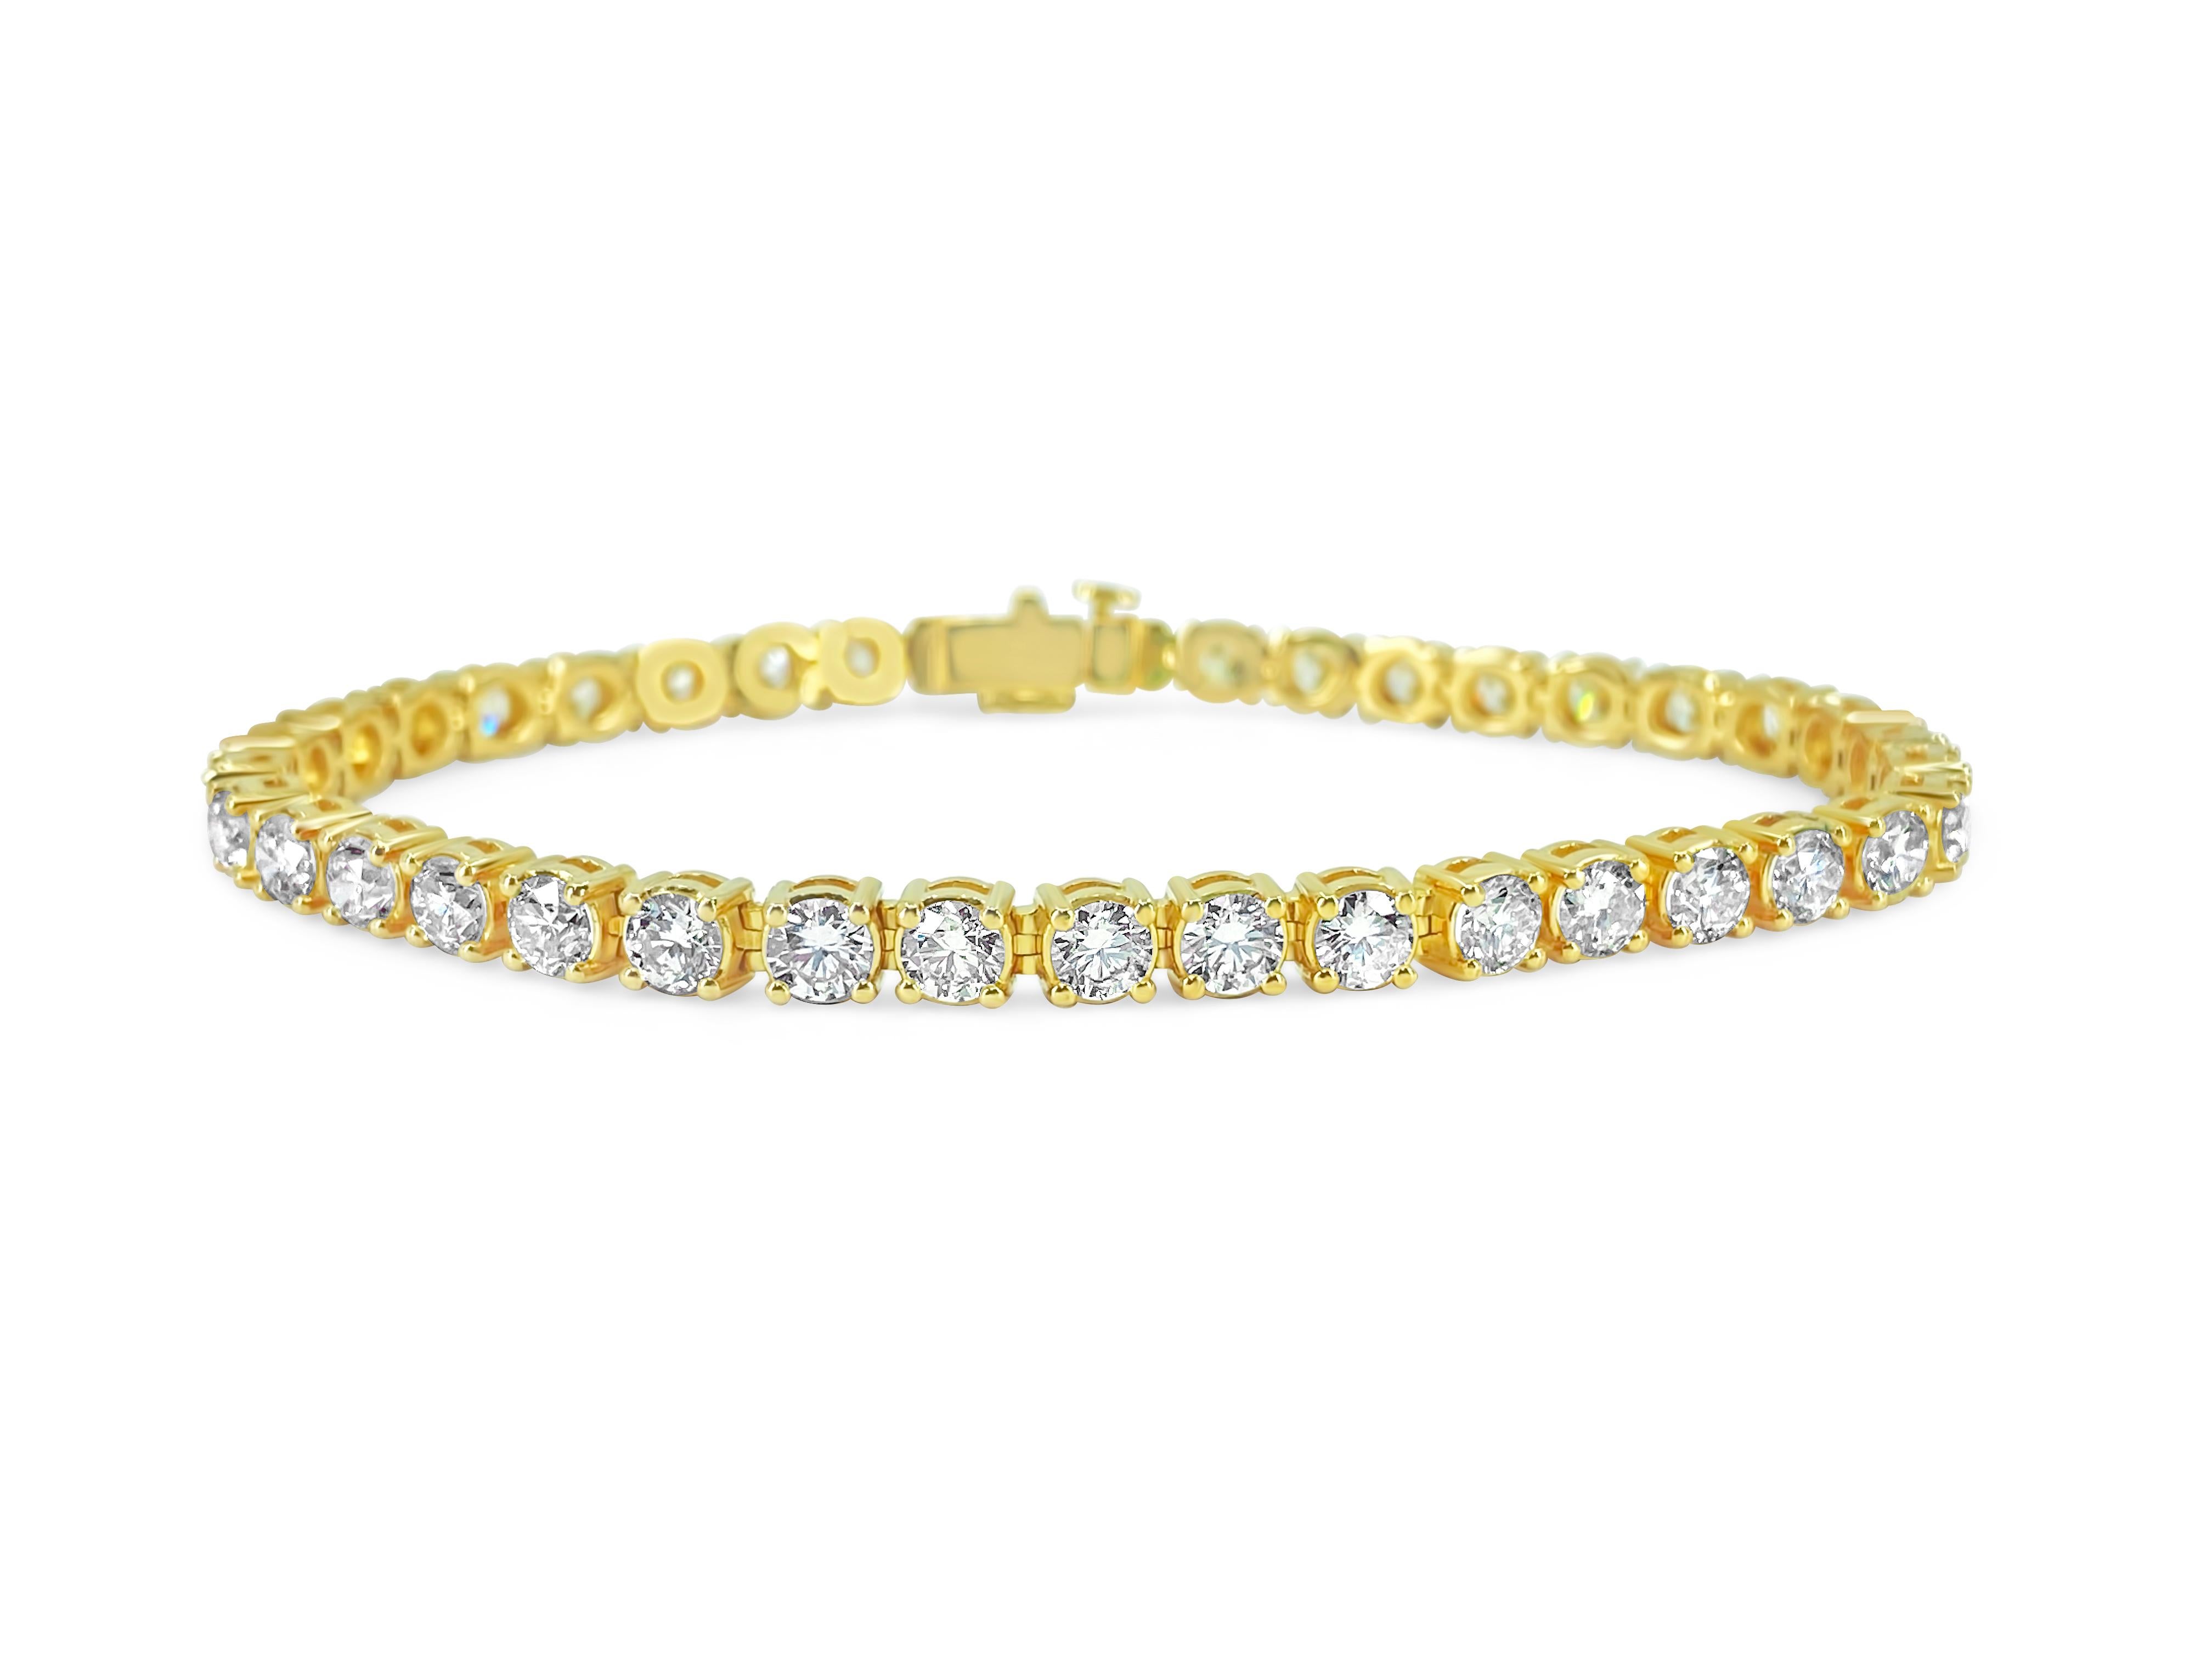 Brilliant Cut 12.33 Carat Diamond Tennis Bracelet in 14k Gold For Sale